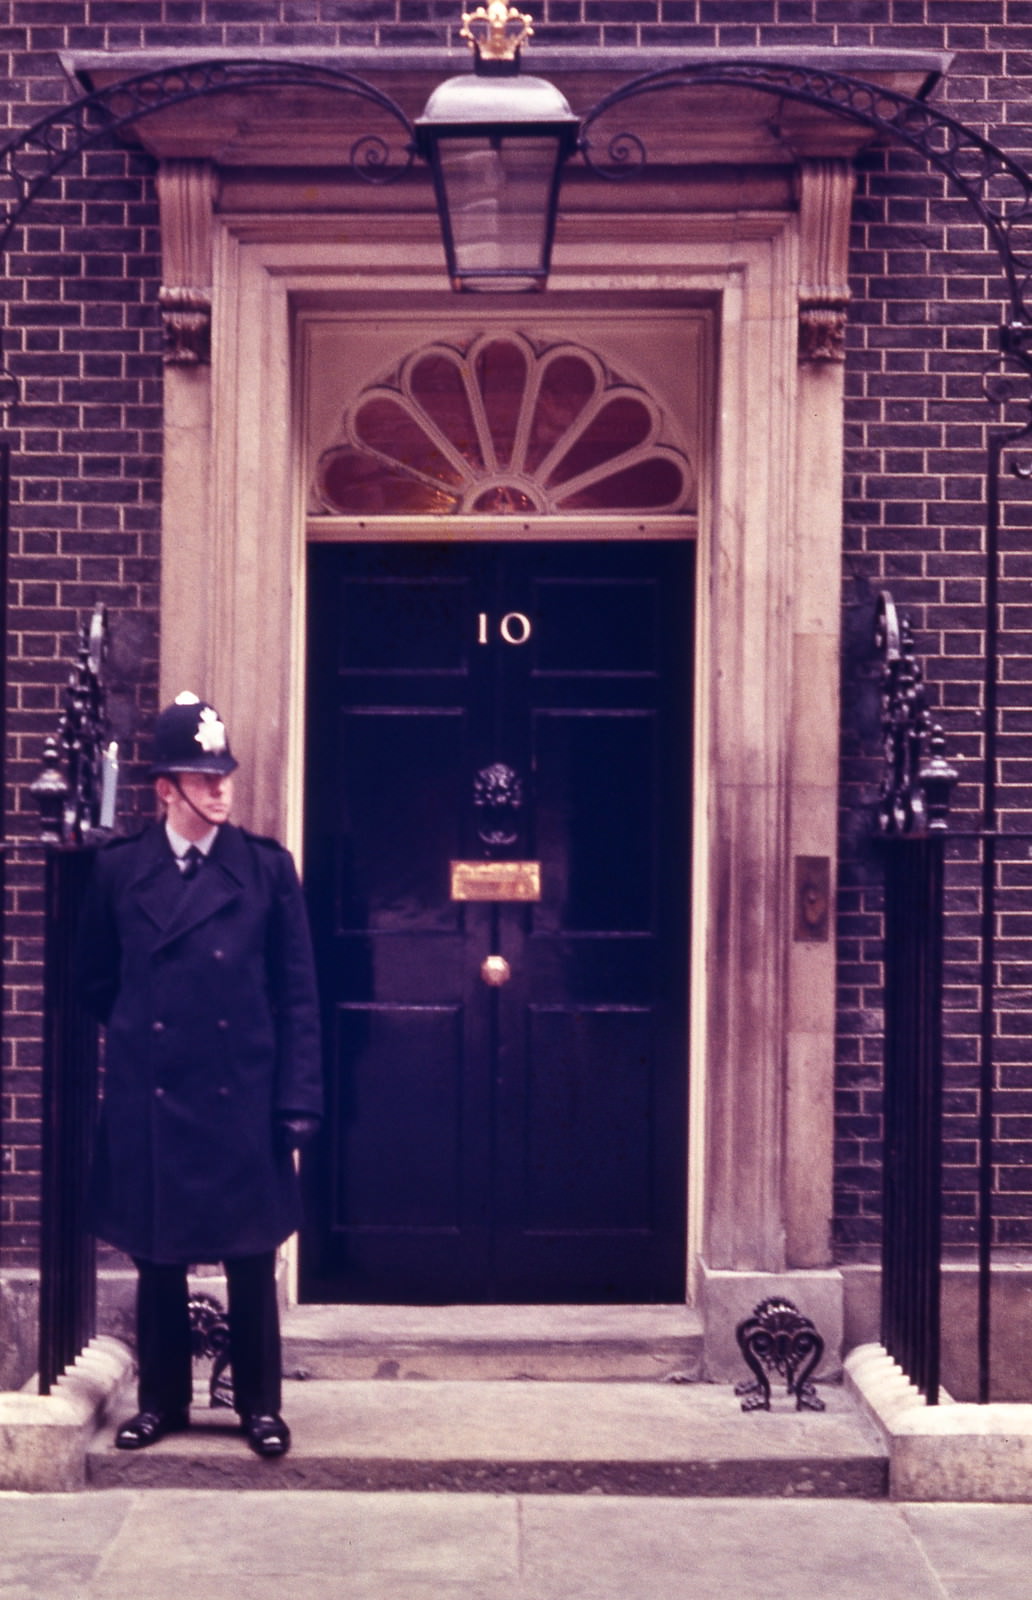 10 Downing Street, London, February 1971